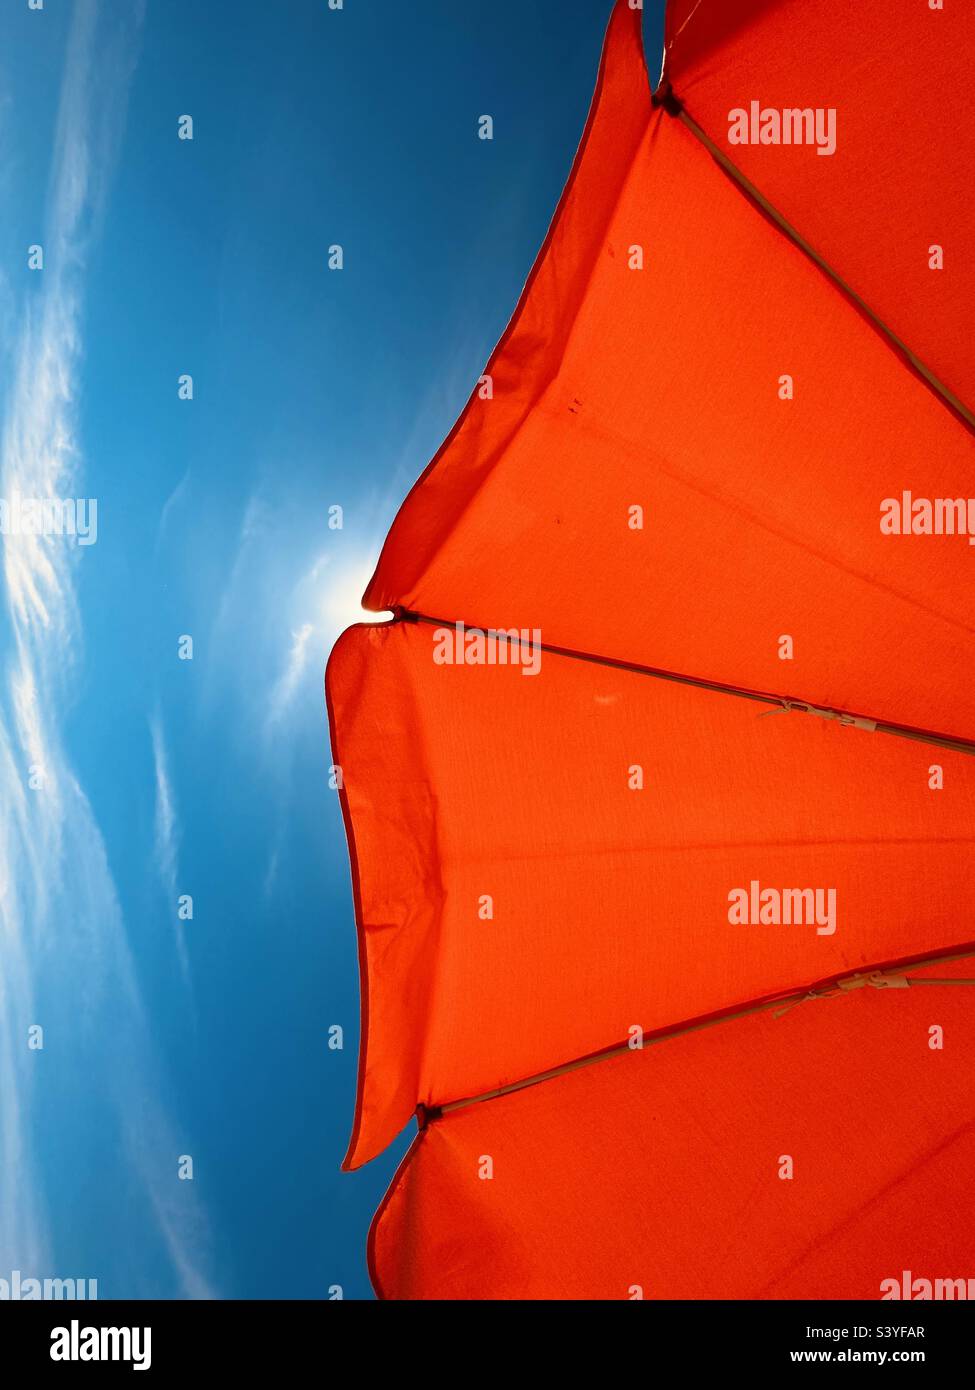 Orange beach umbrella against a blue sky Stock Photo